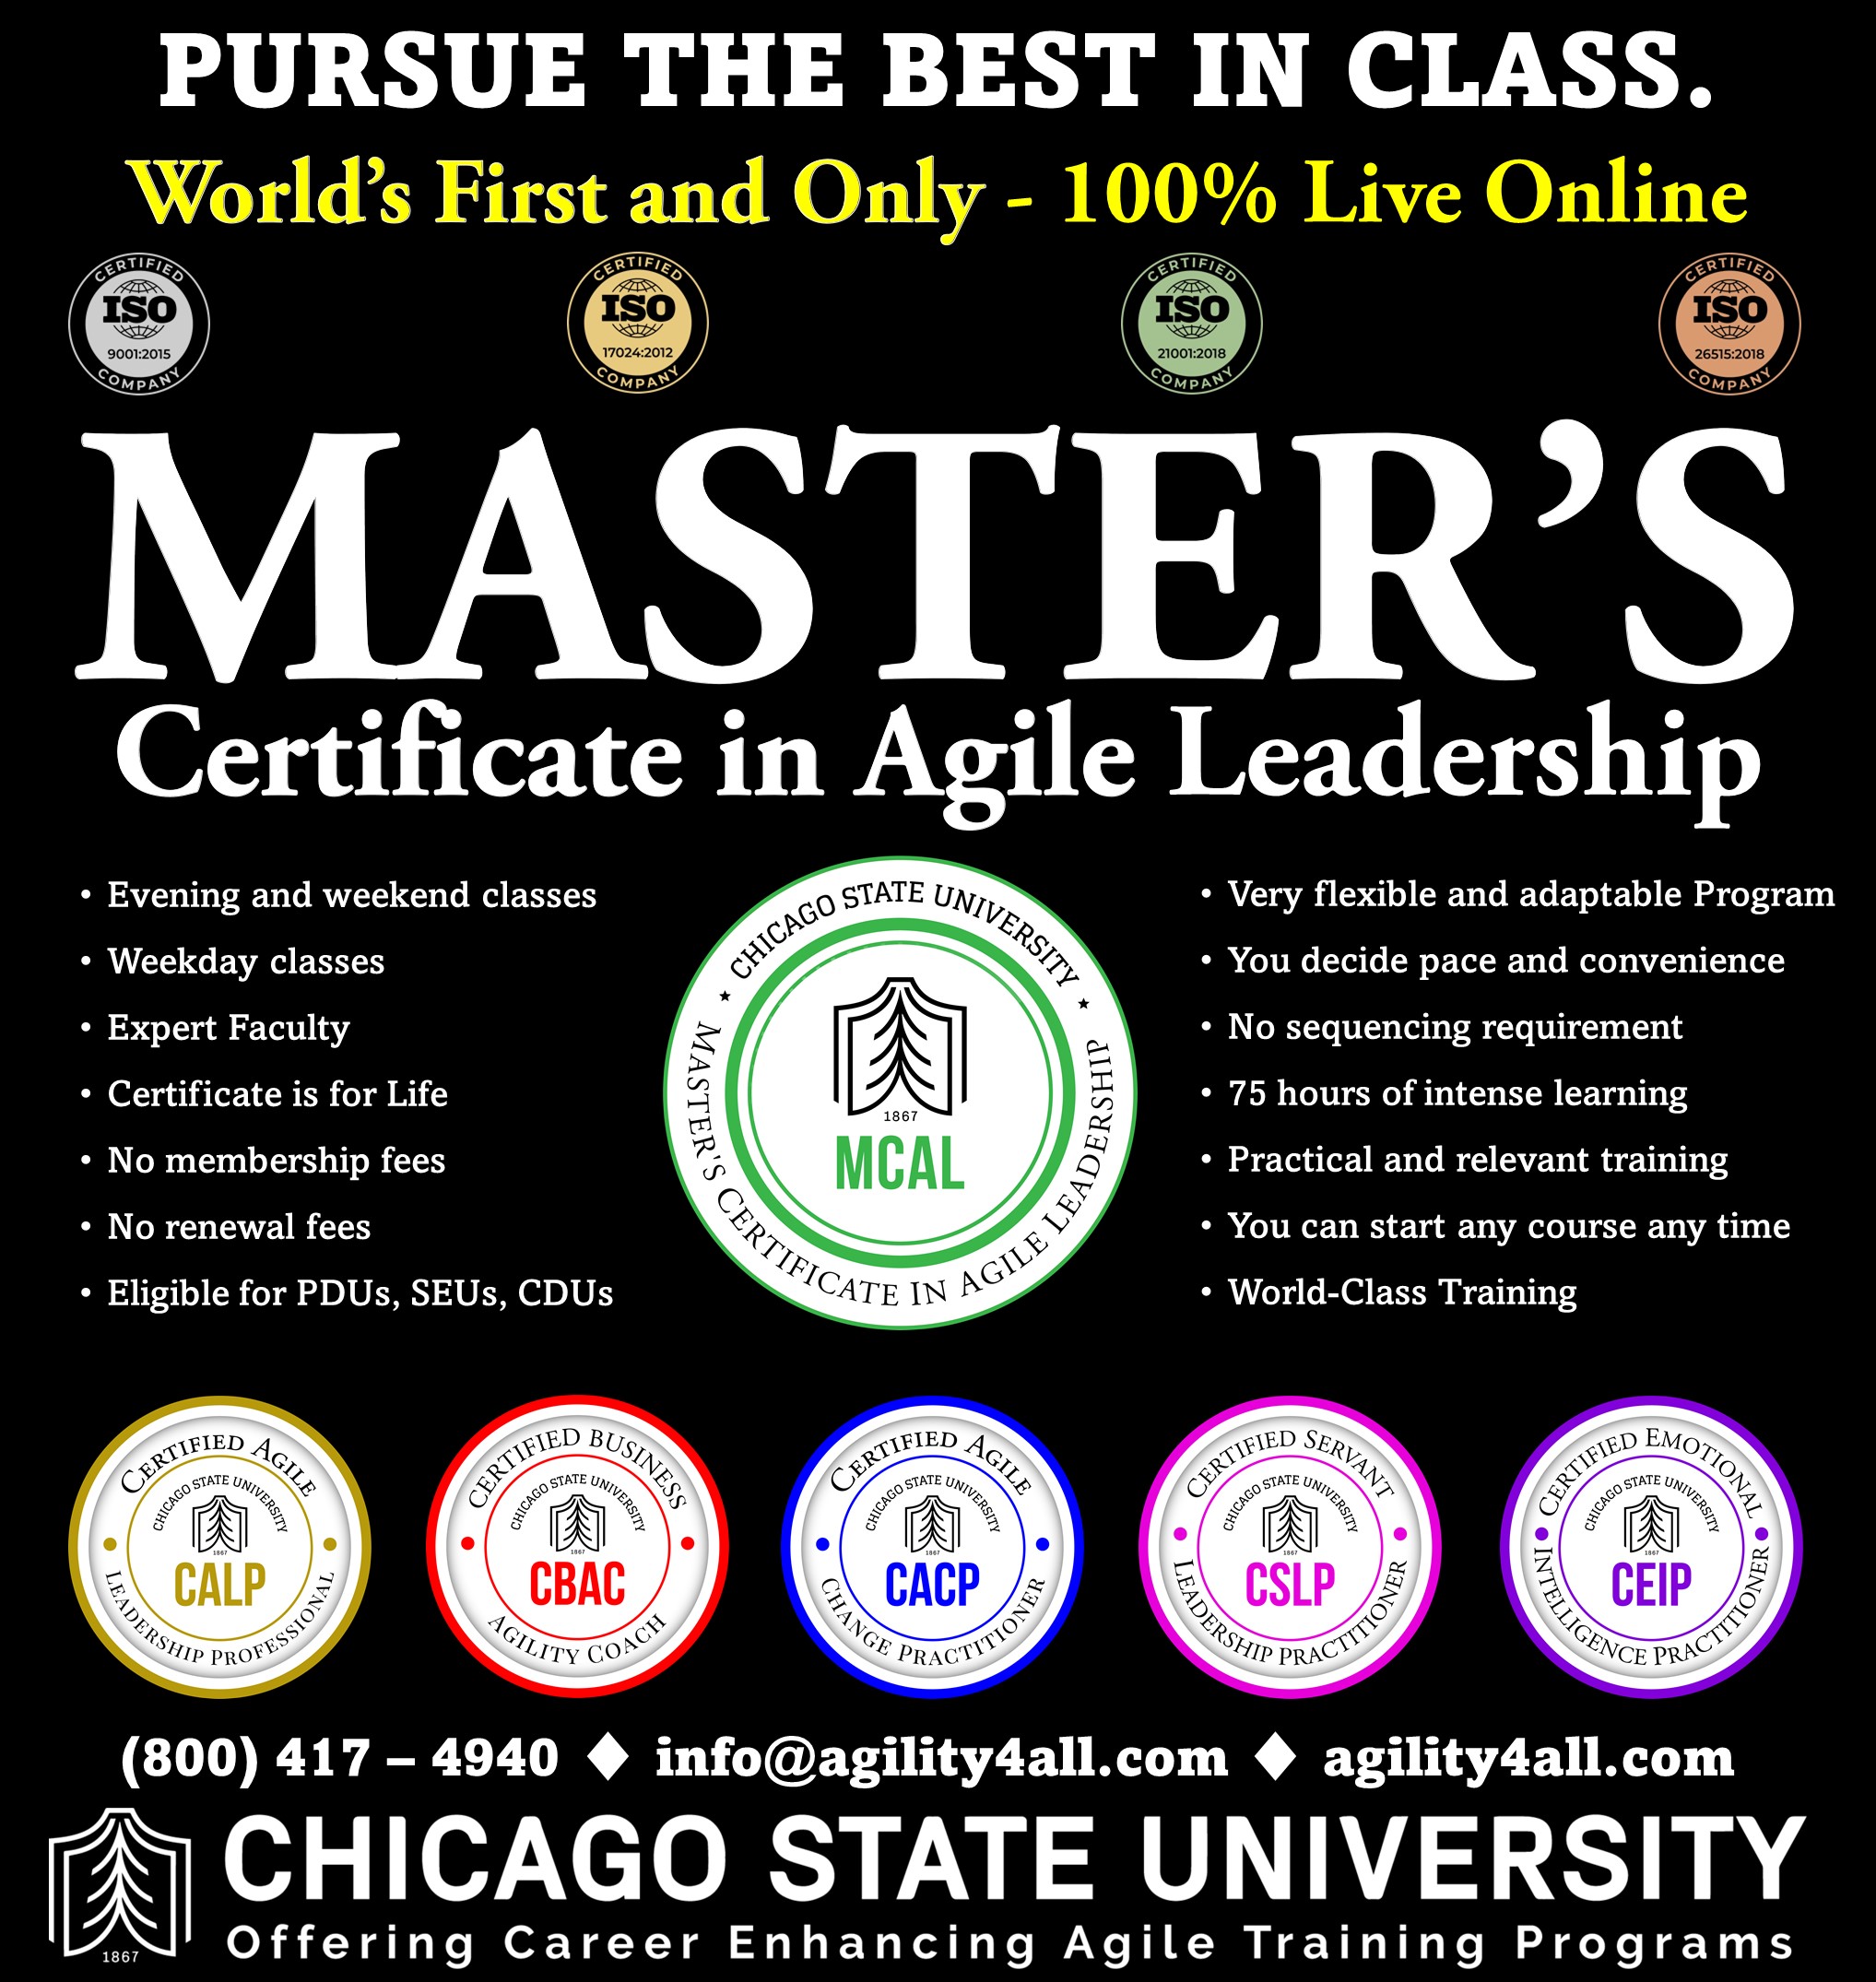 Master's Certificate in Agile Leadership